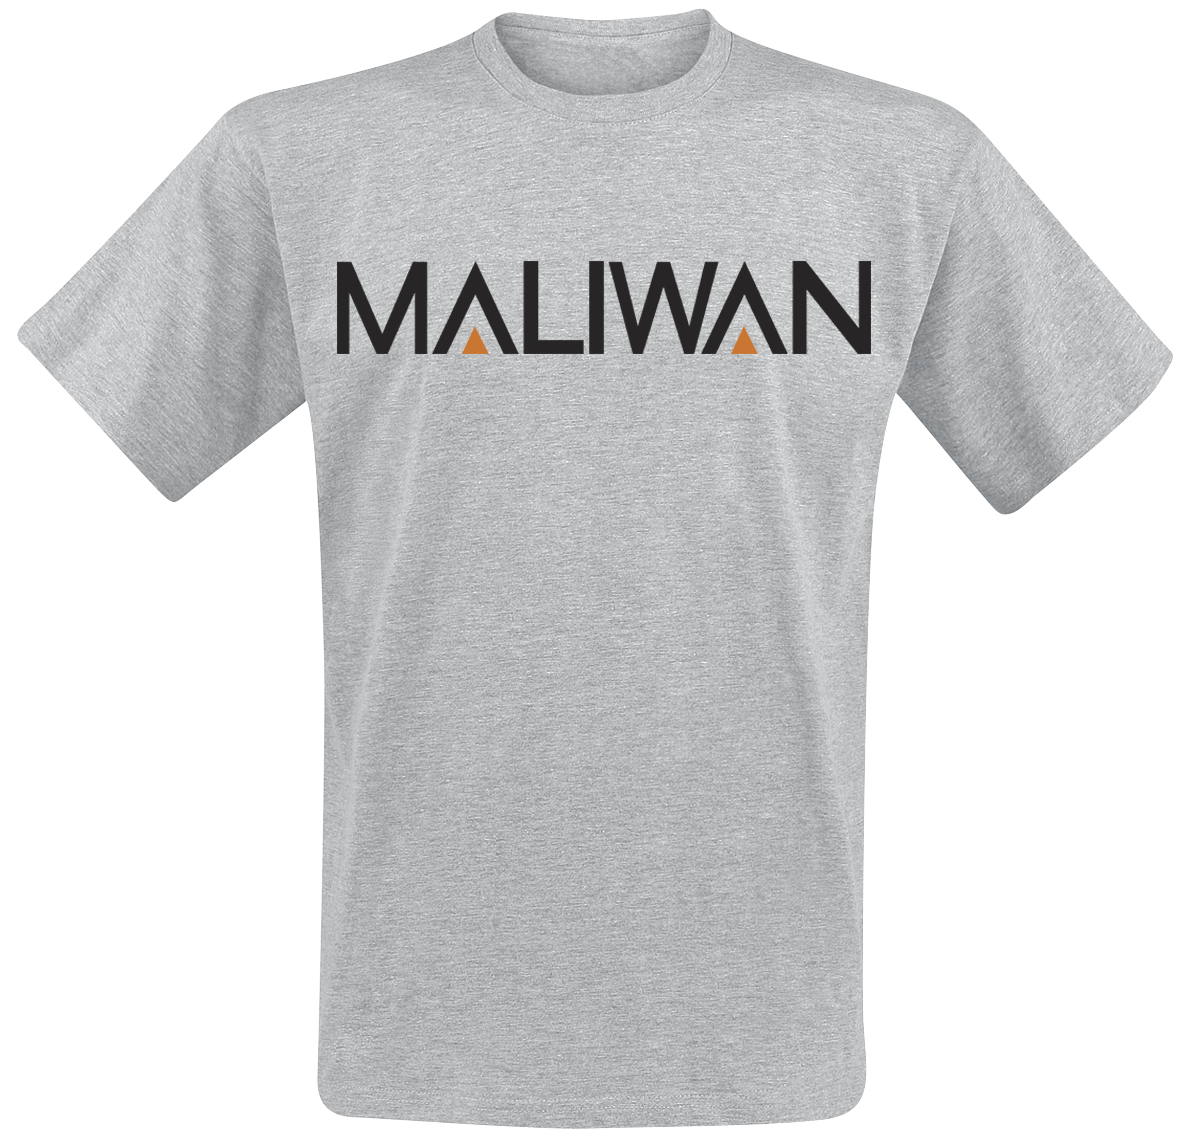 Borderlands - 3 - Maliwan - T-Shirt - grau meliert - EMP Exklusiv!